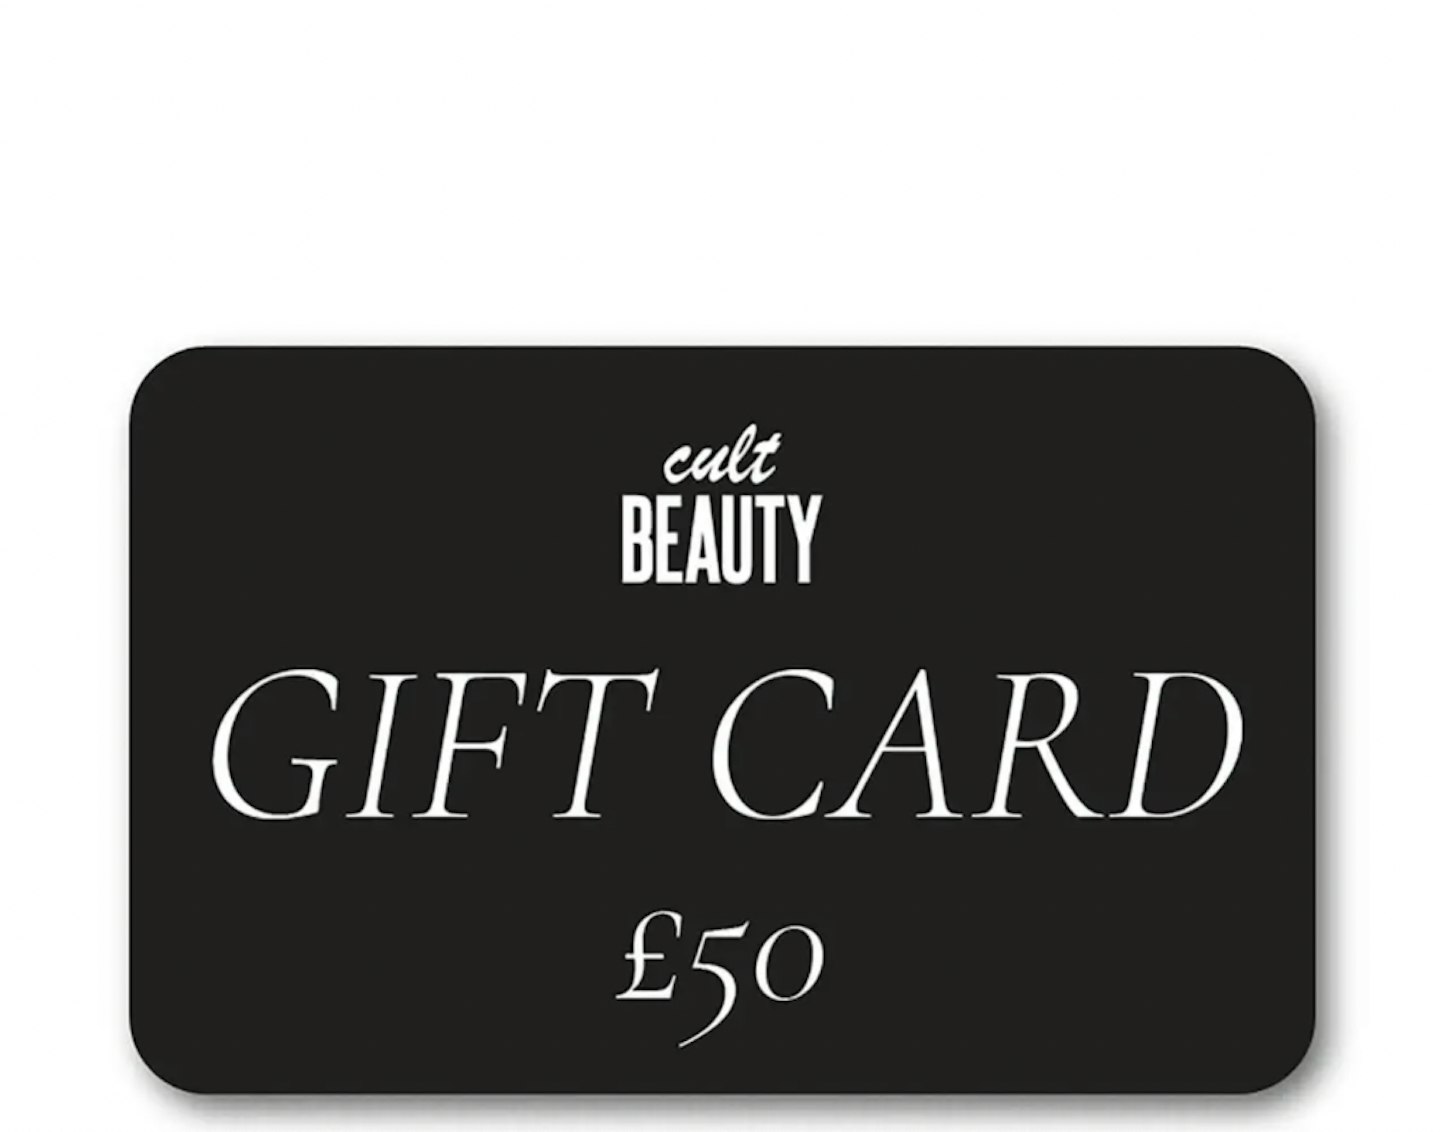 Cult Beauty Gift Card, £50